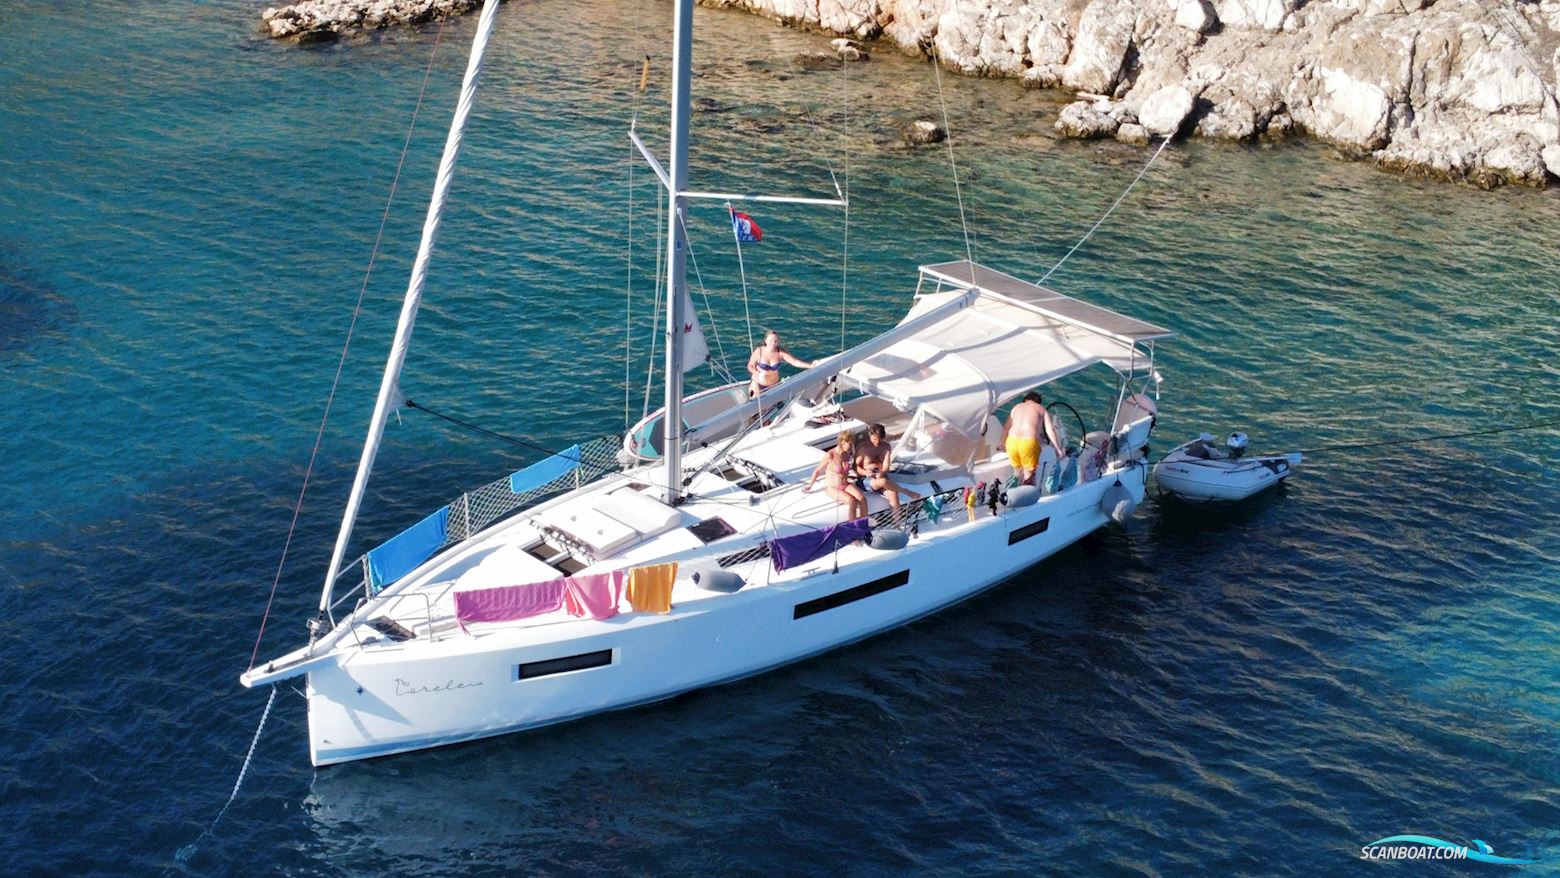 Jeanneau Sun Odyssey 440 Sailing boat 2019, with Yanmar engine, Turkey